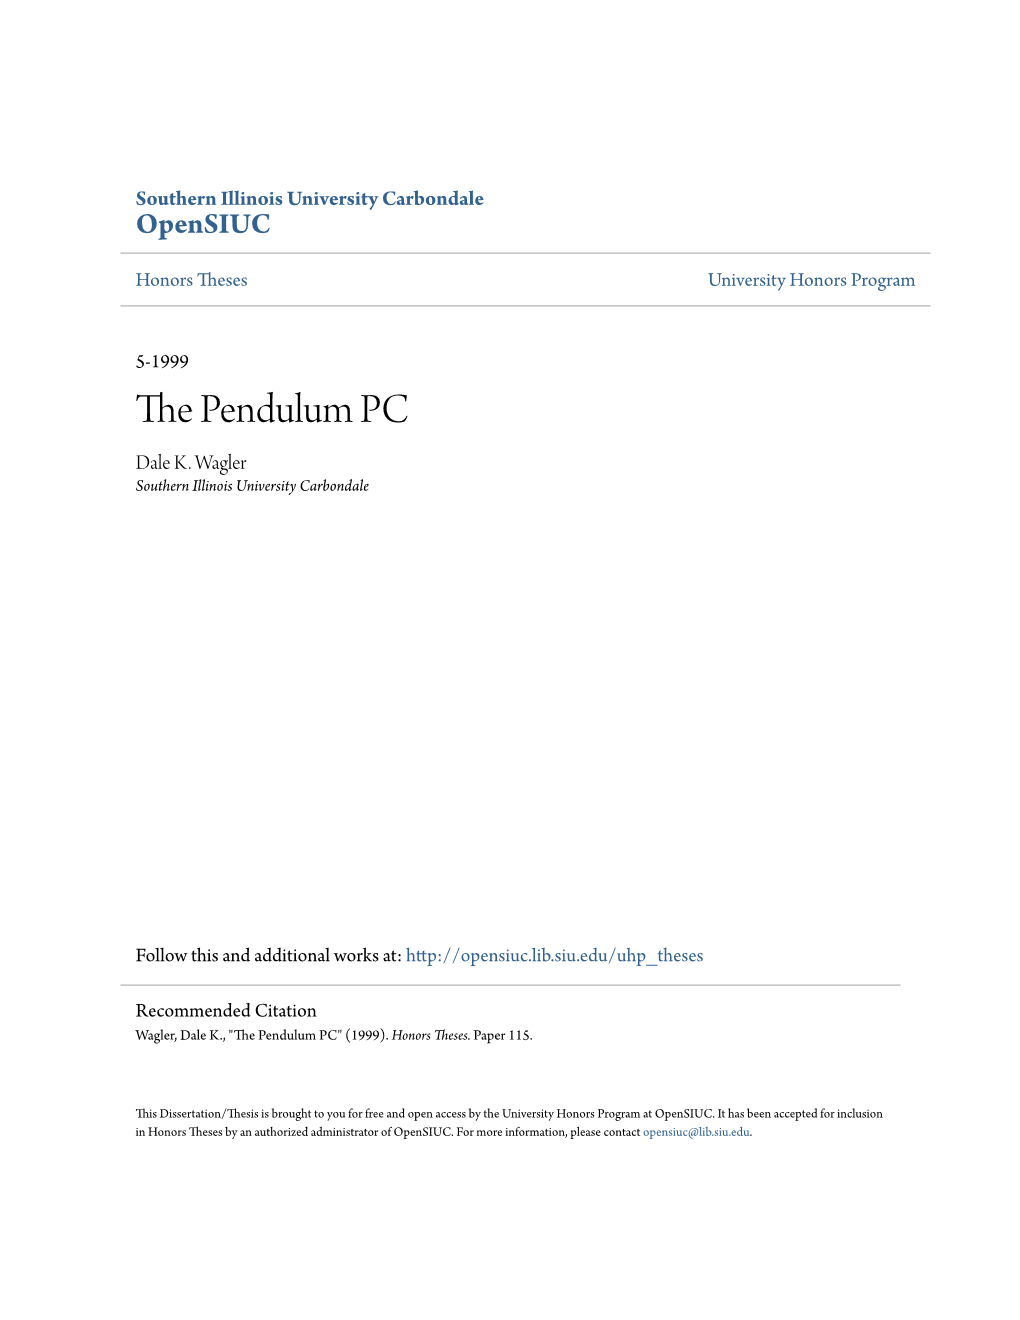 The Pendulum PC I I I I By: Dale K